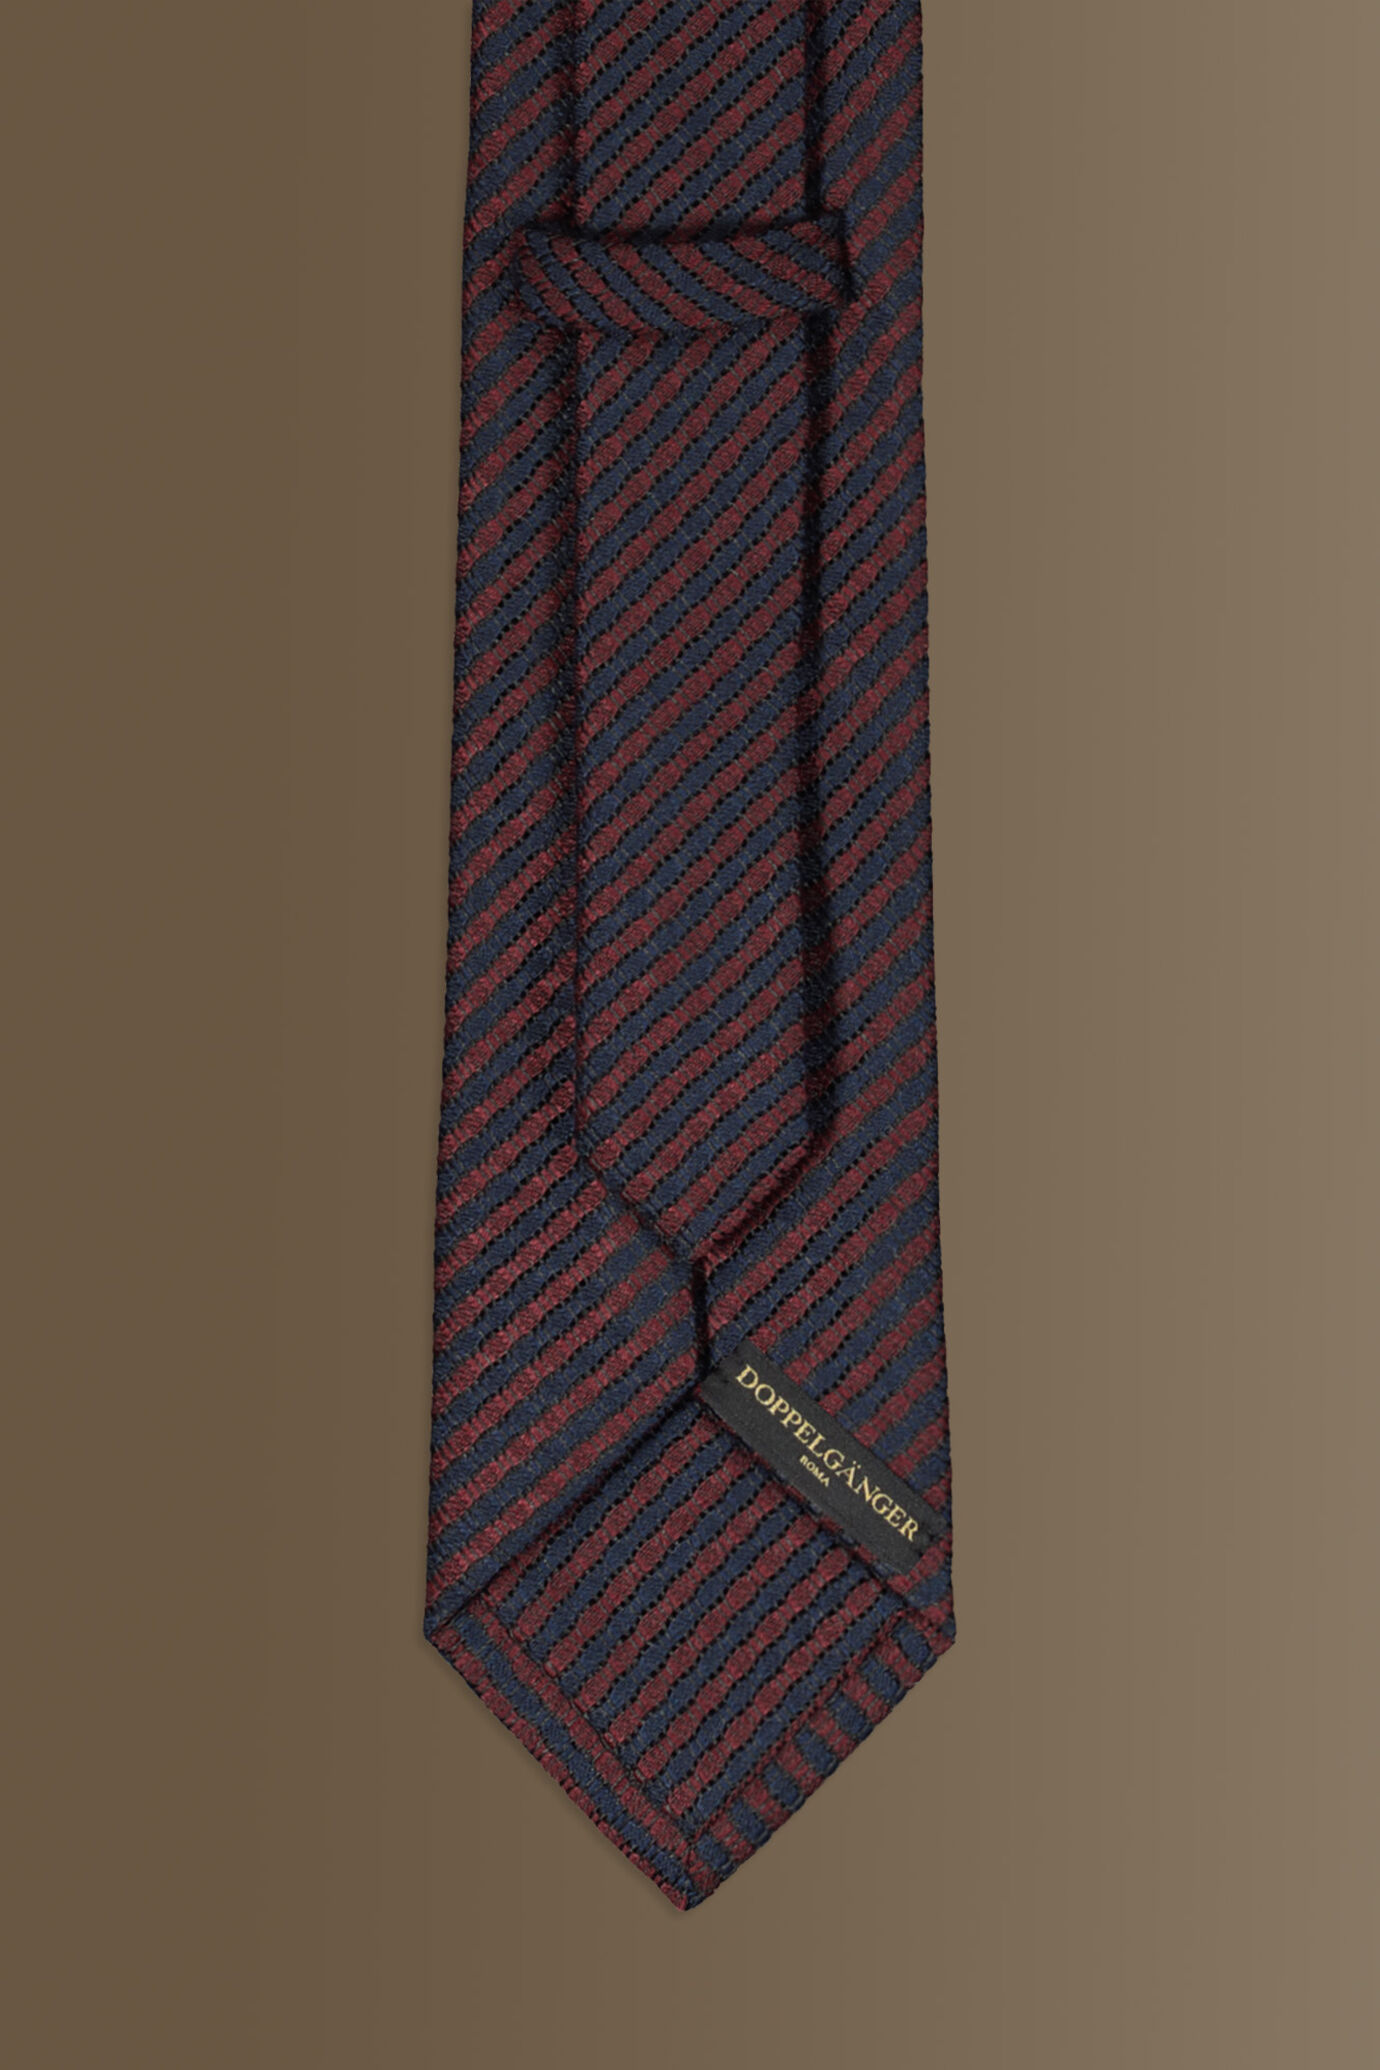 Cravatta uomo a righe blu misto bamboo regimental image number 1